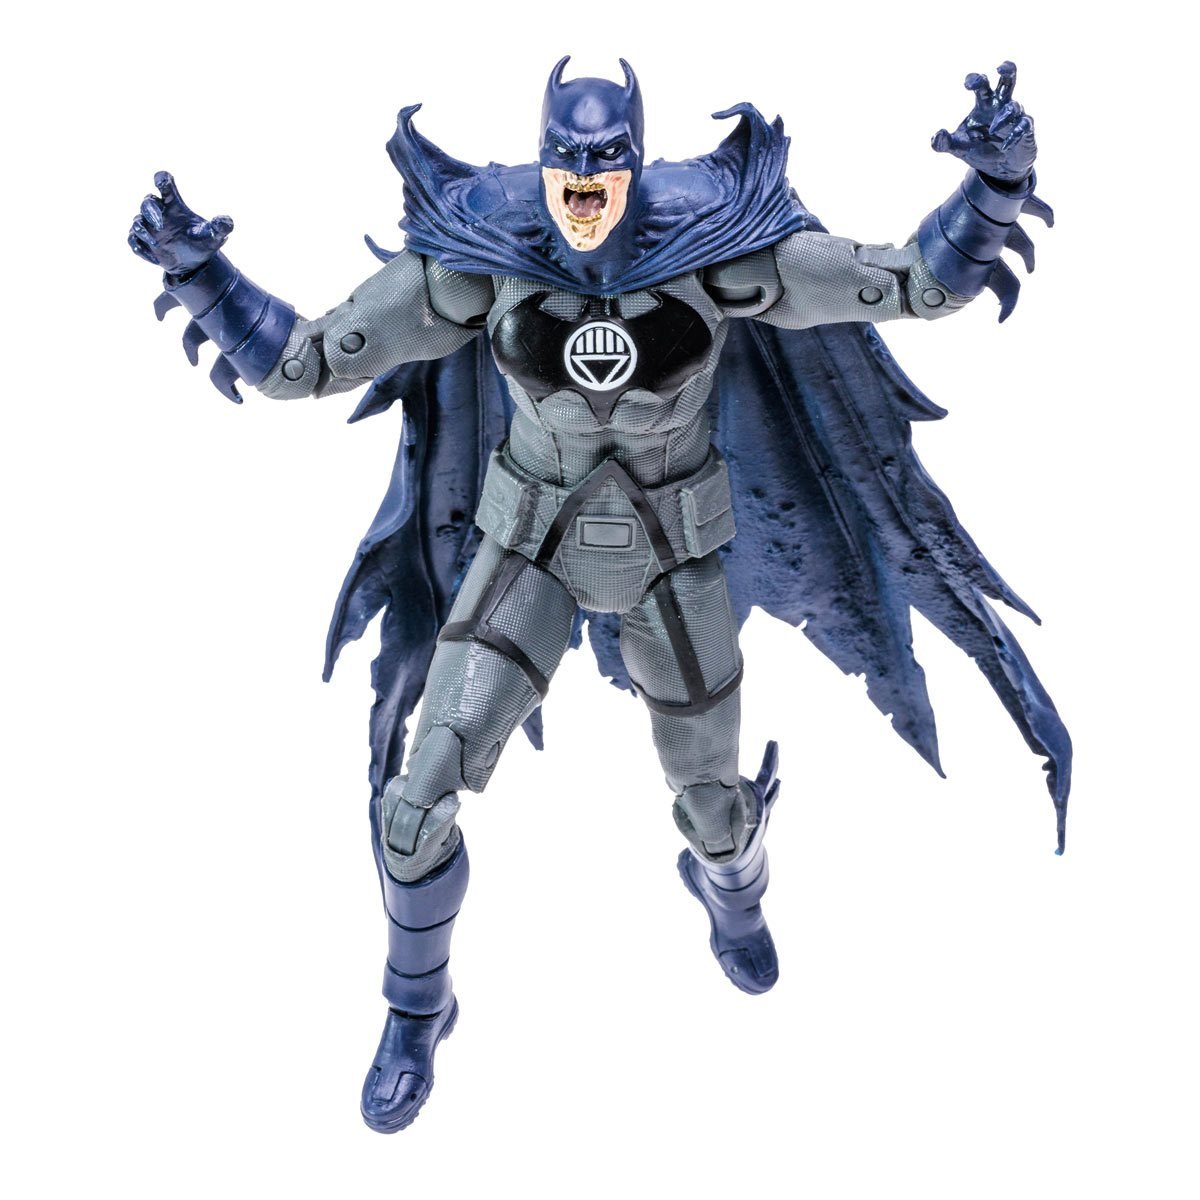 DC Direct Blackest Night Series 5 Black Lantern Batman 6in Action Figure for sale online 